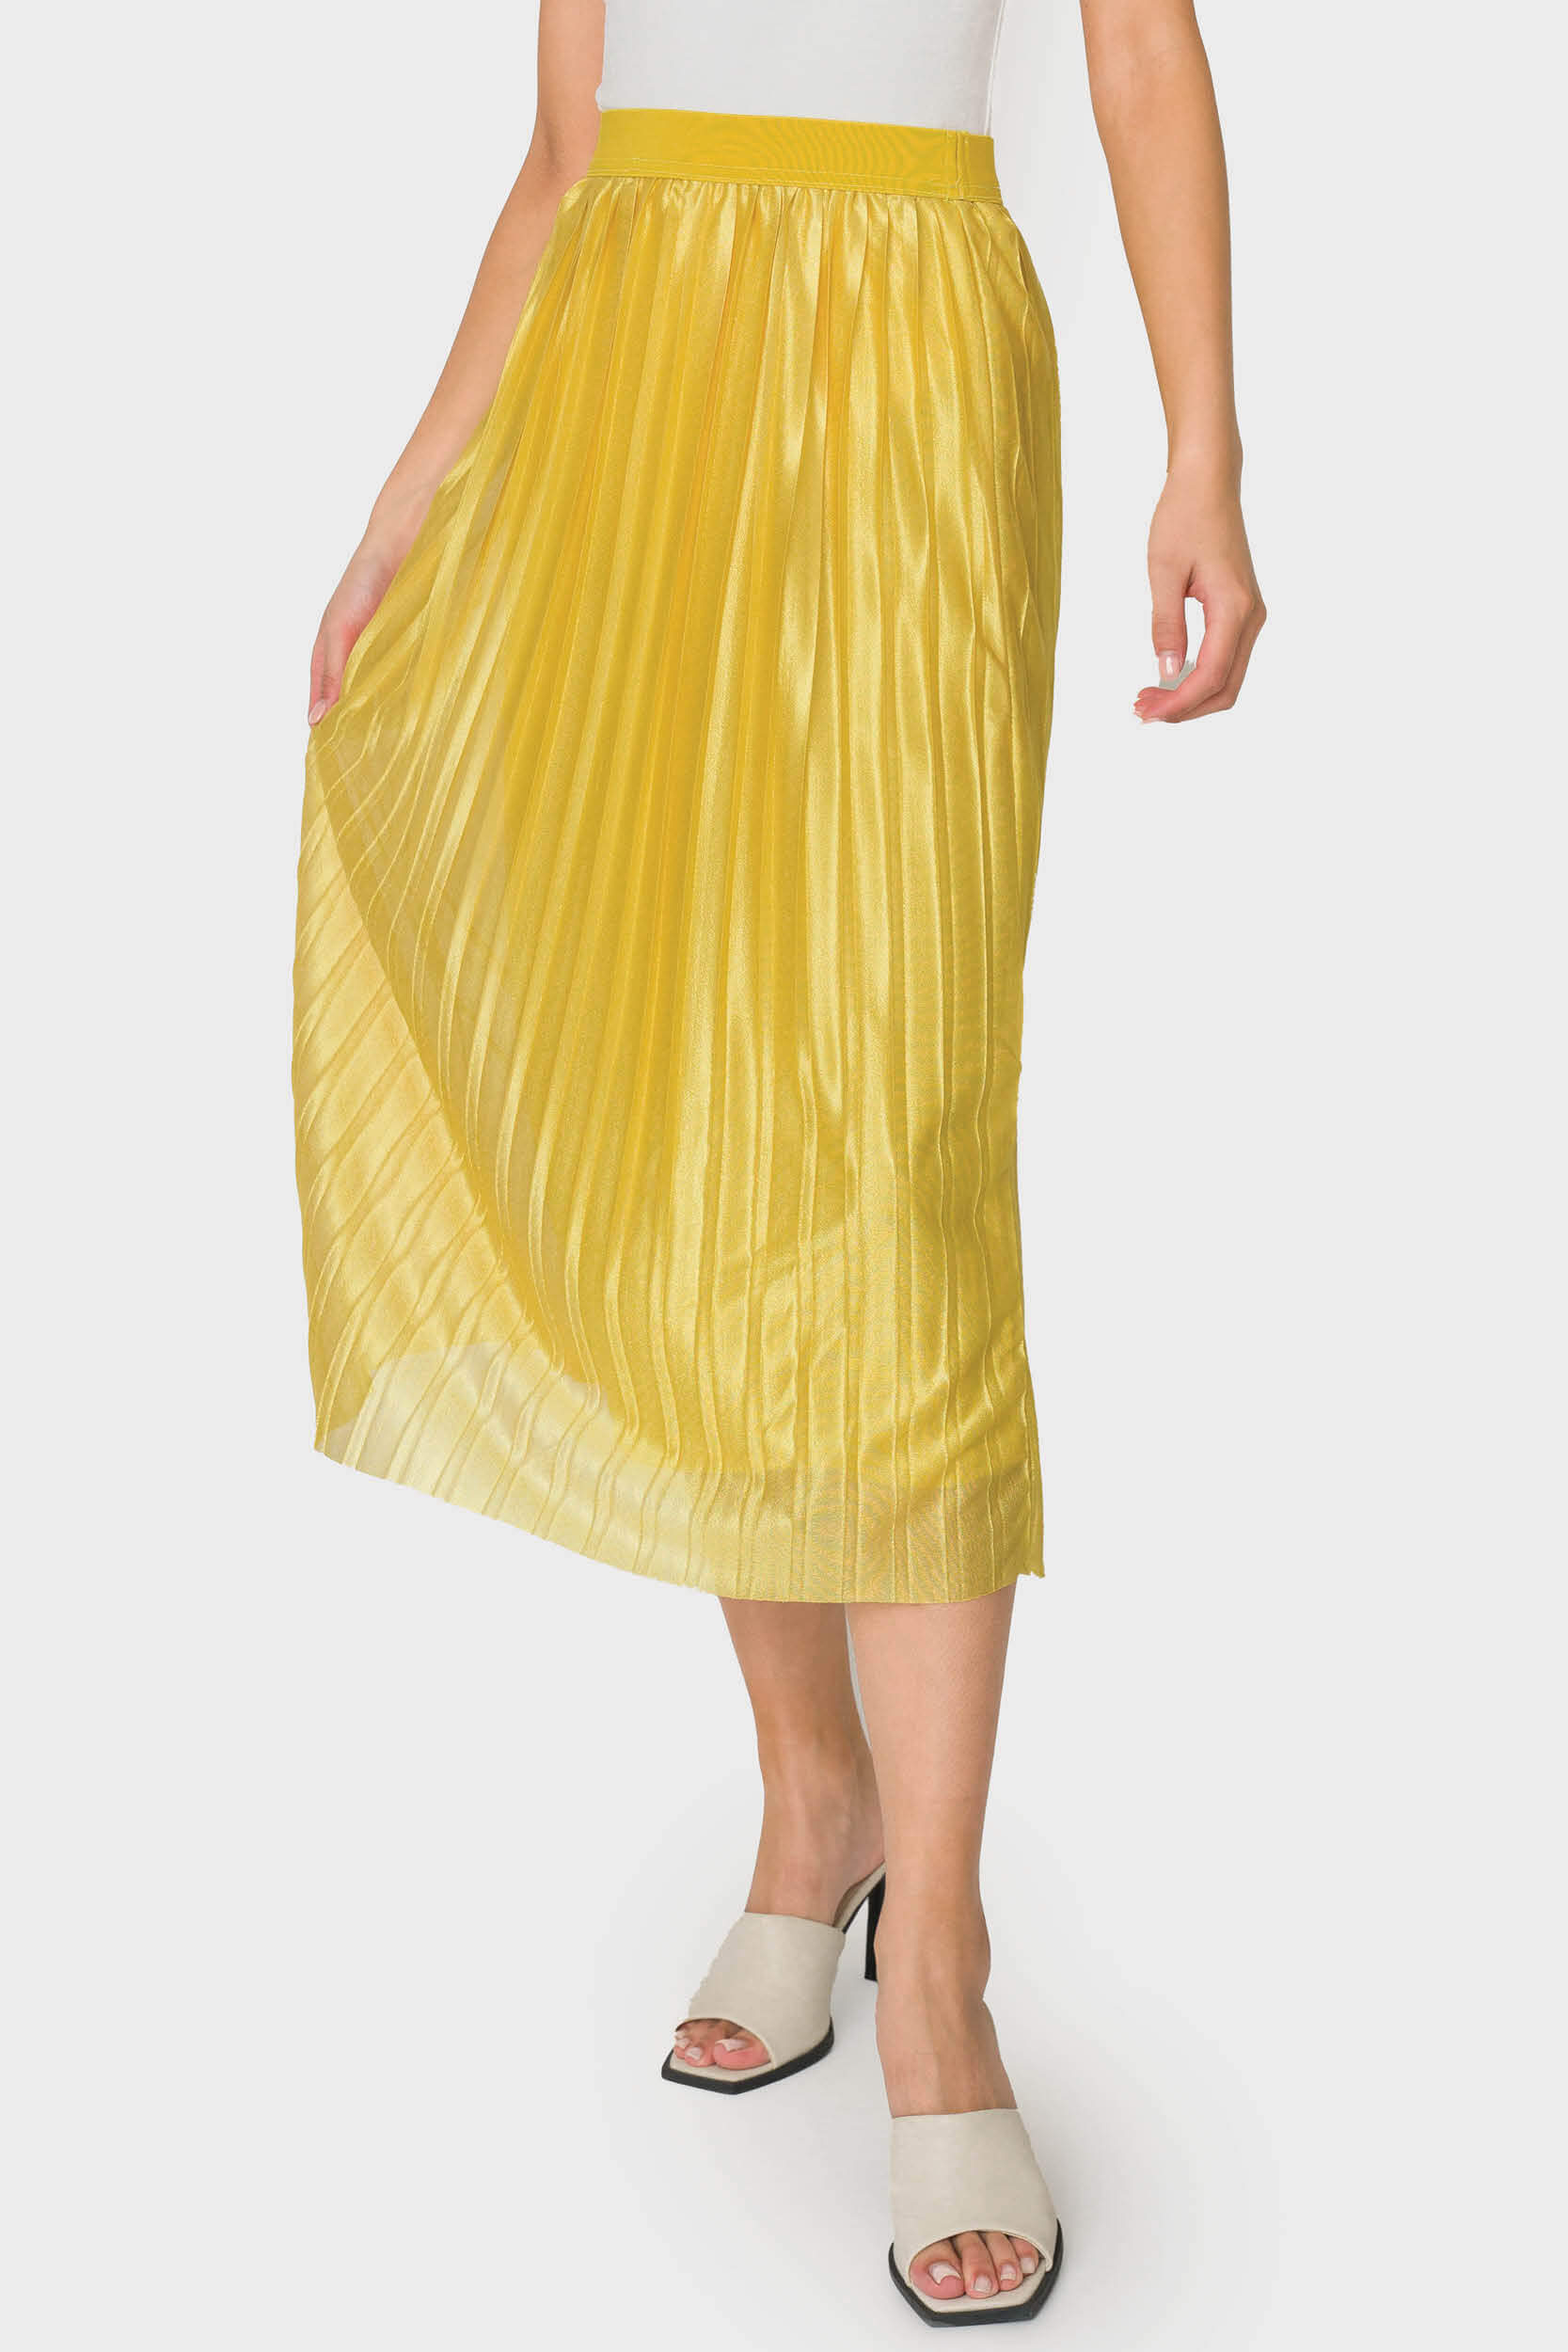 Star Shine Gold Pleated Midi Skirt